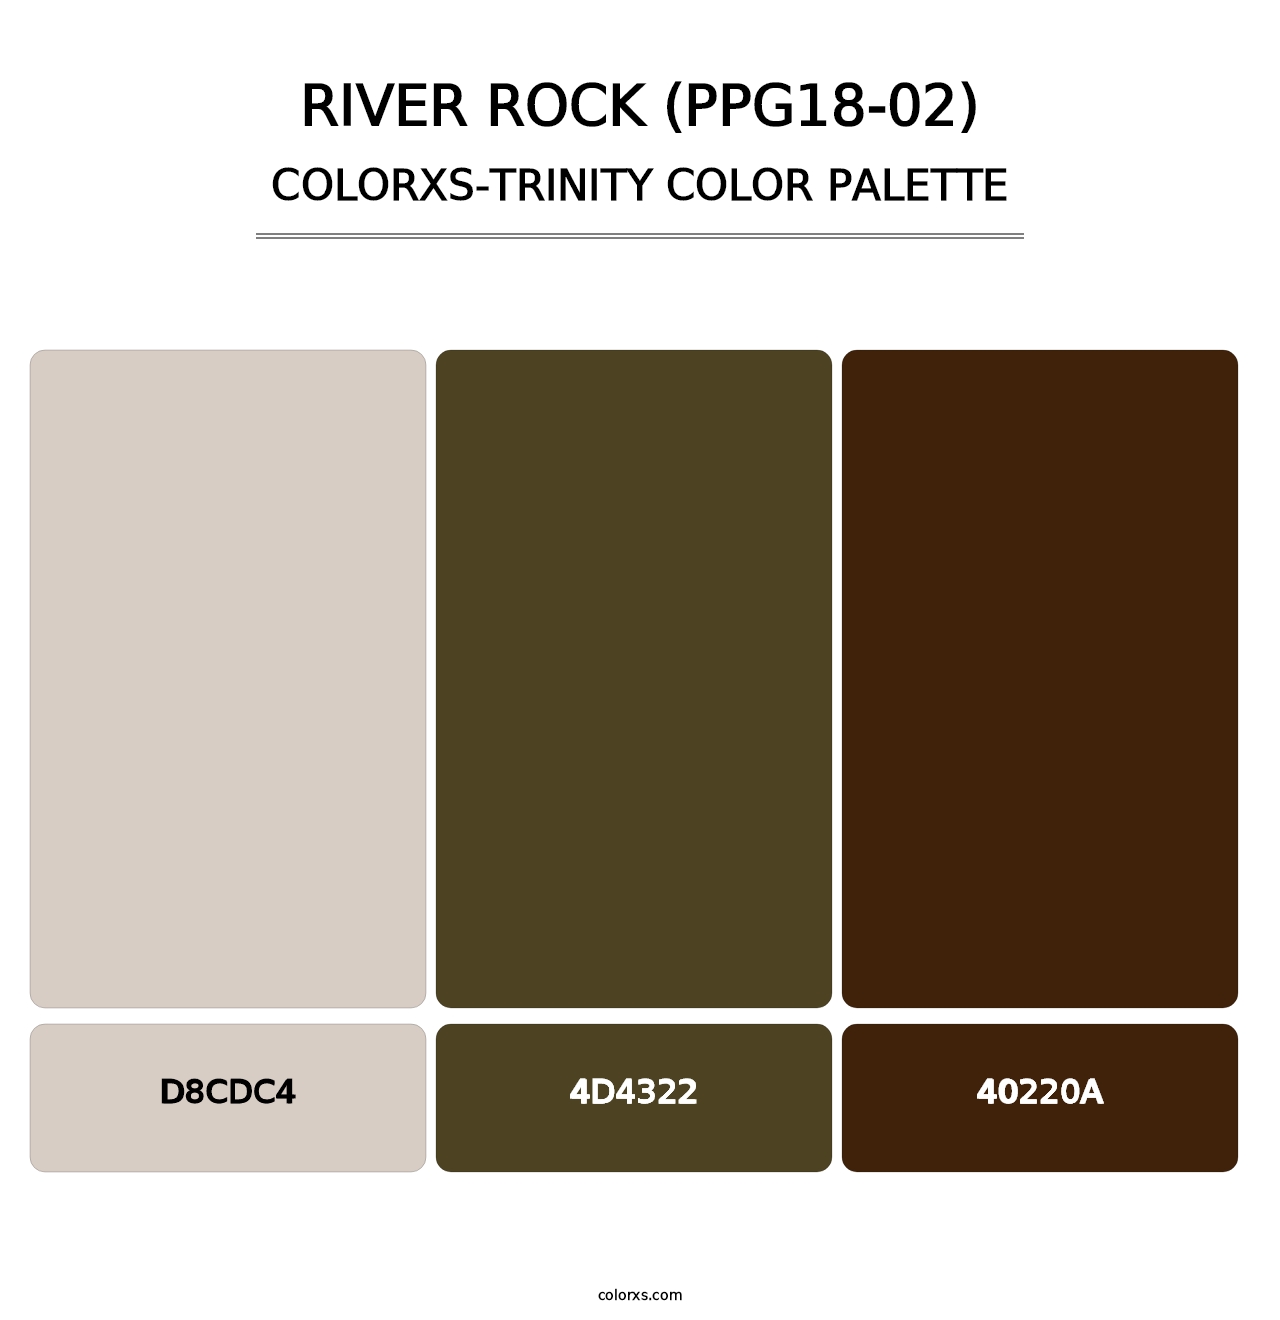 River Rock (PPG18-02) - Colorxs Trinity Palette